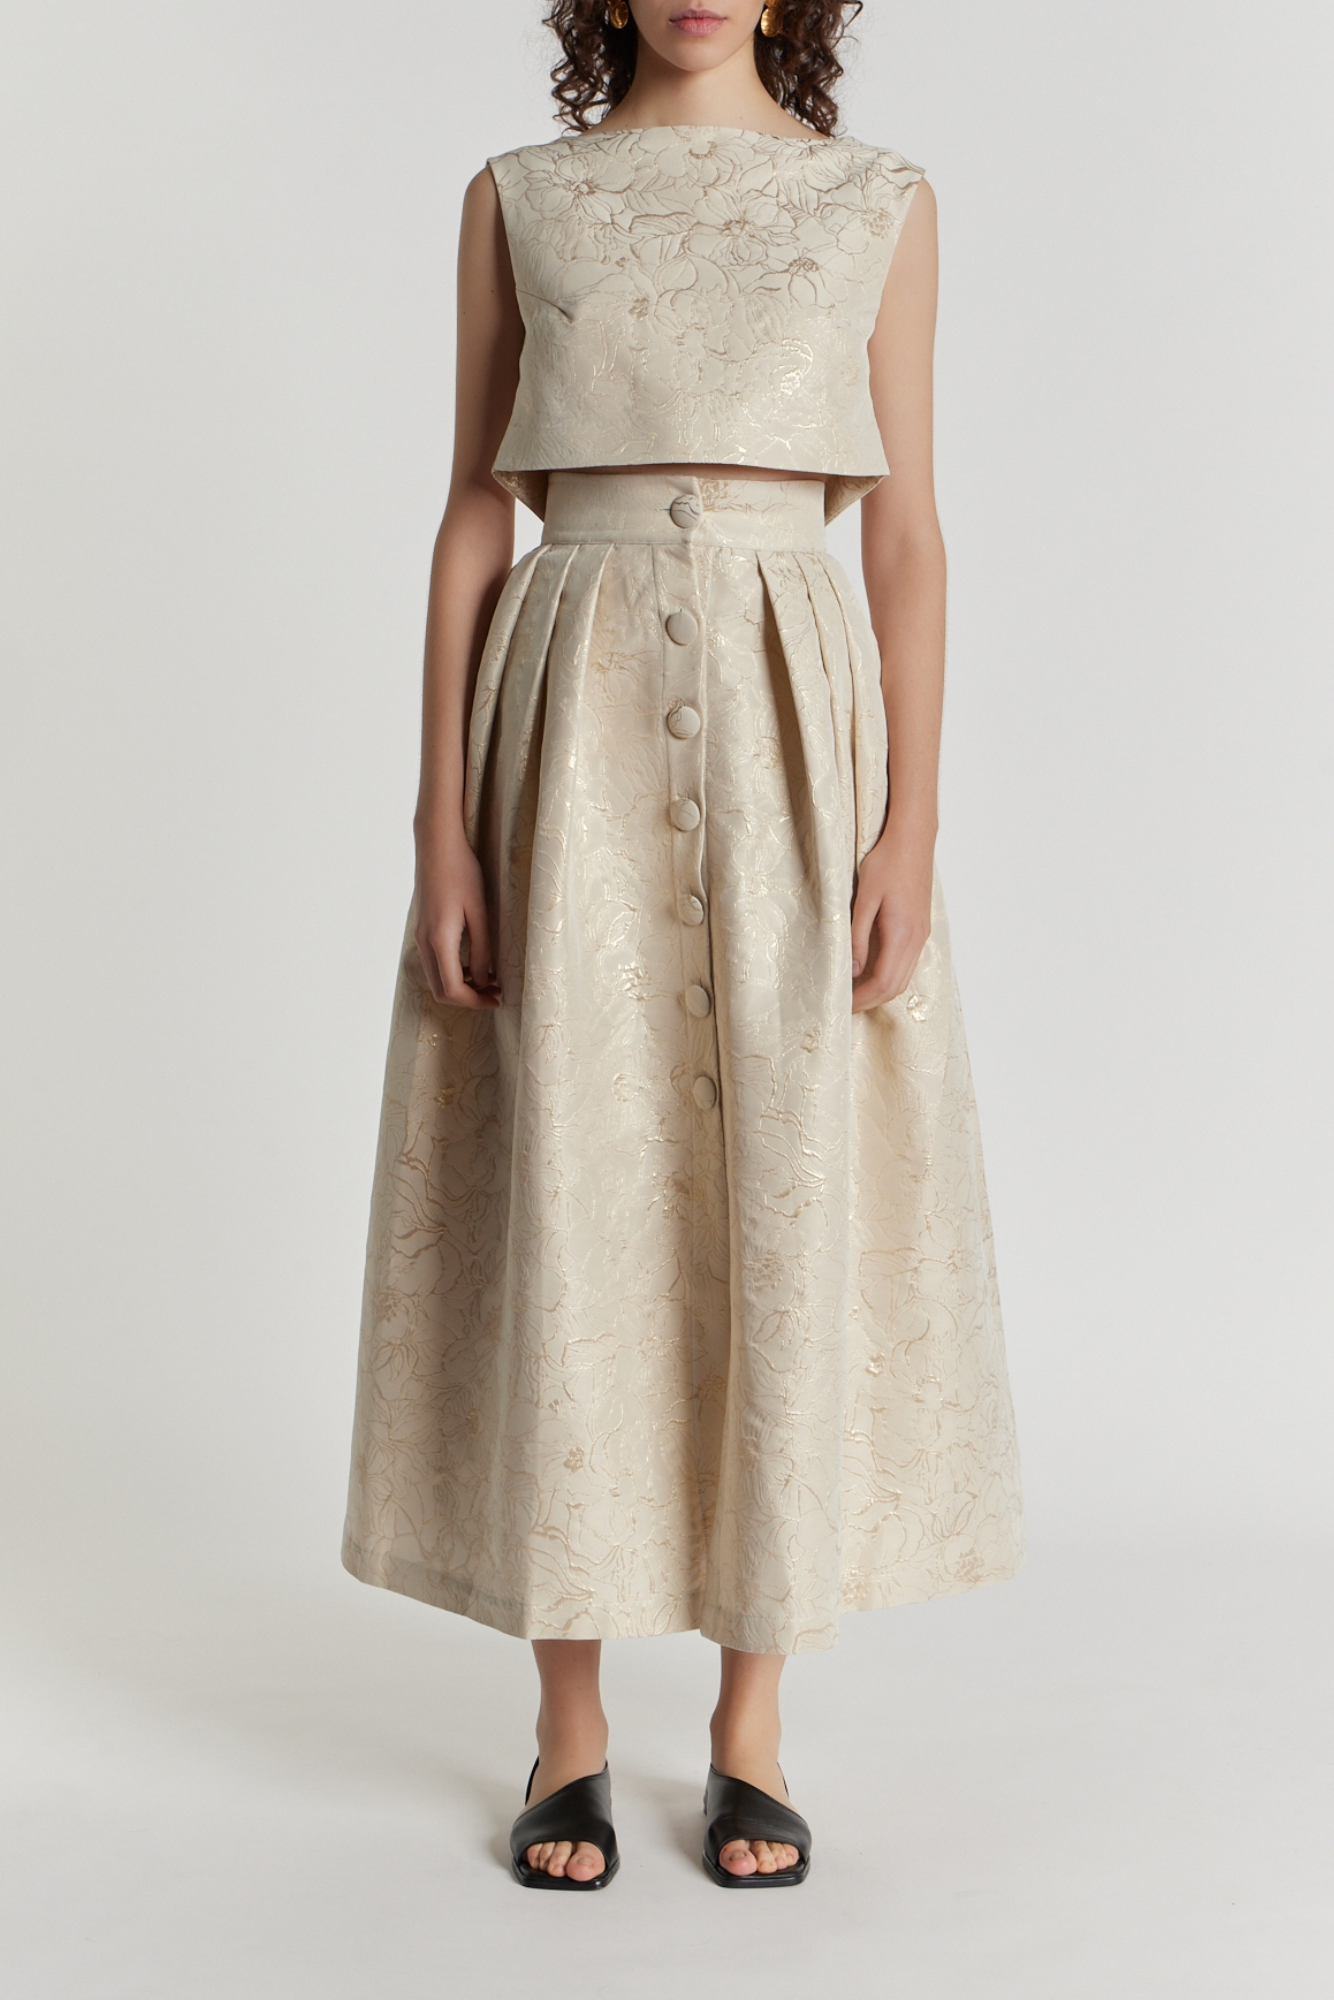 Rose Jacquard Ecru & Gold Maxi Skirt with Button Detail